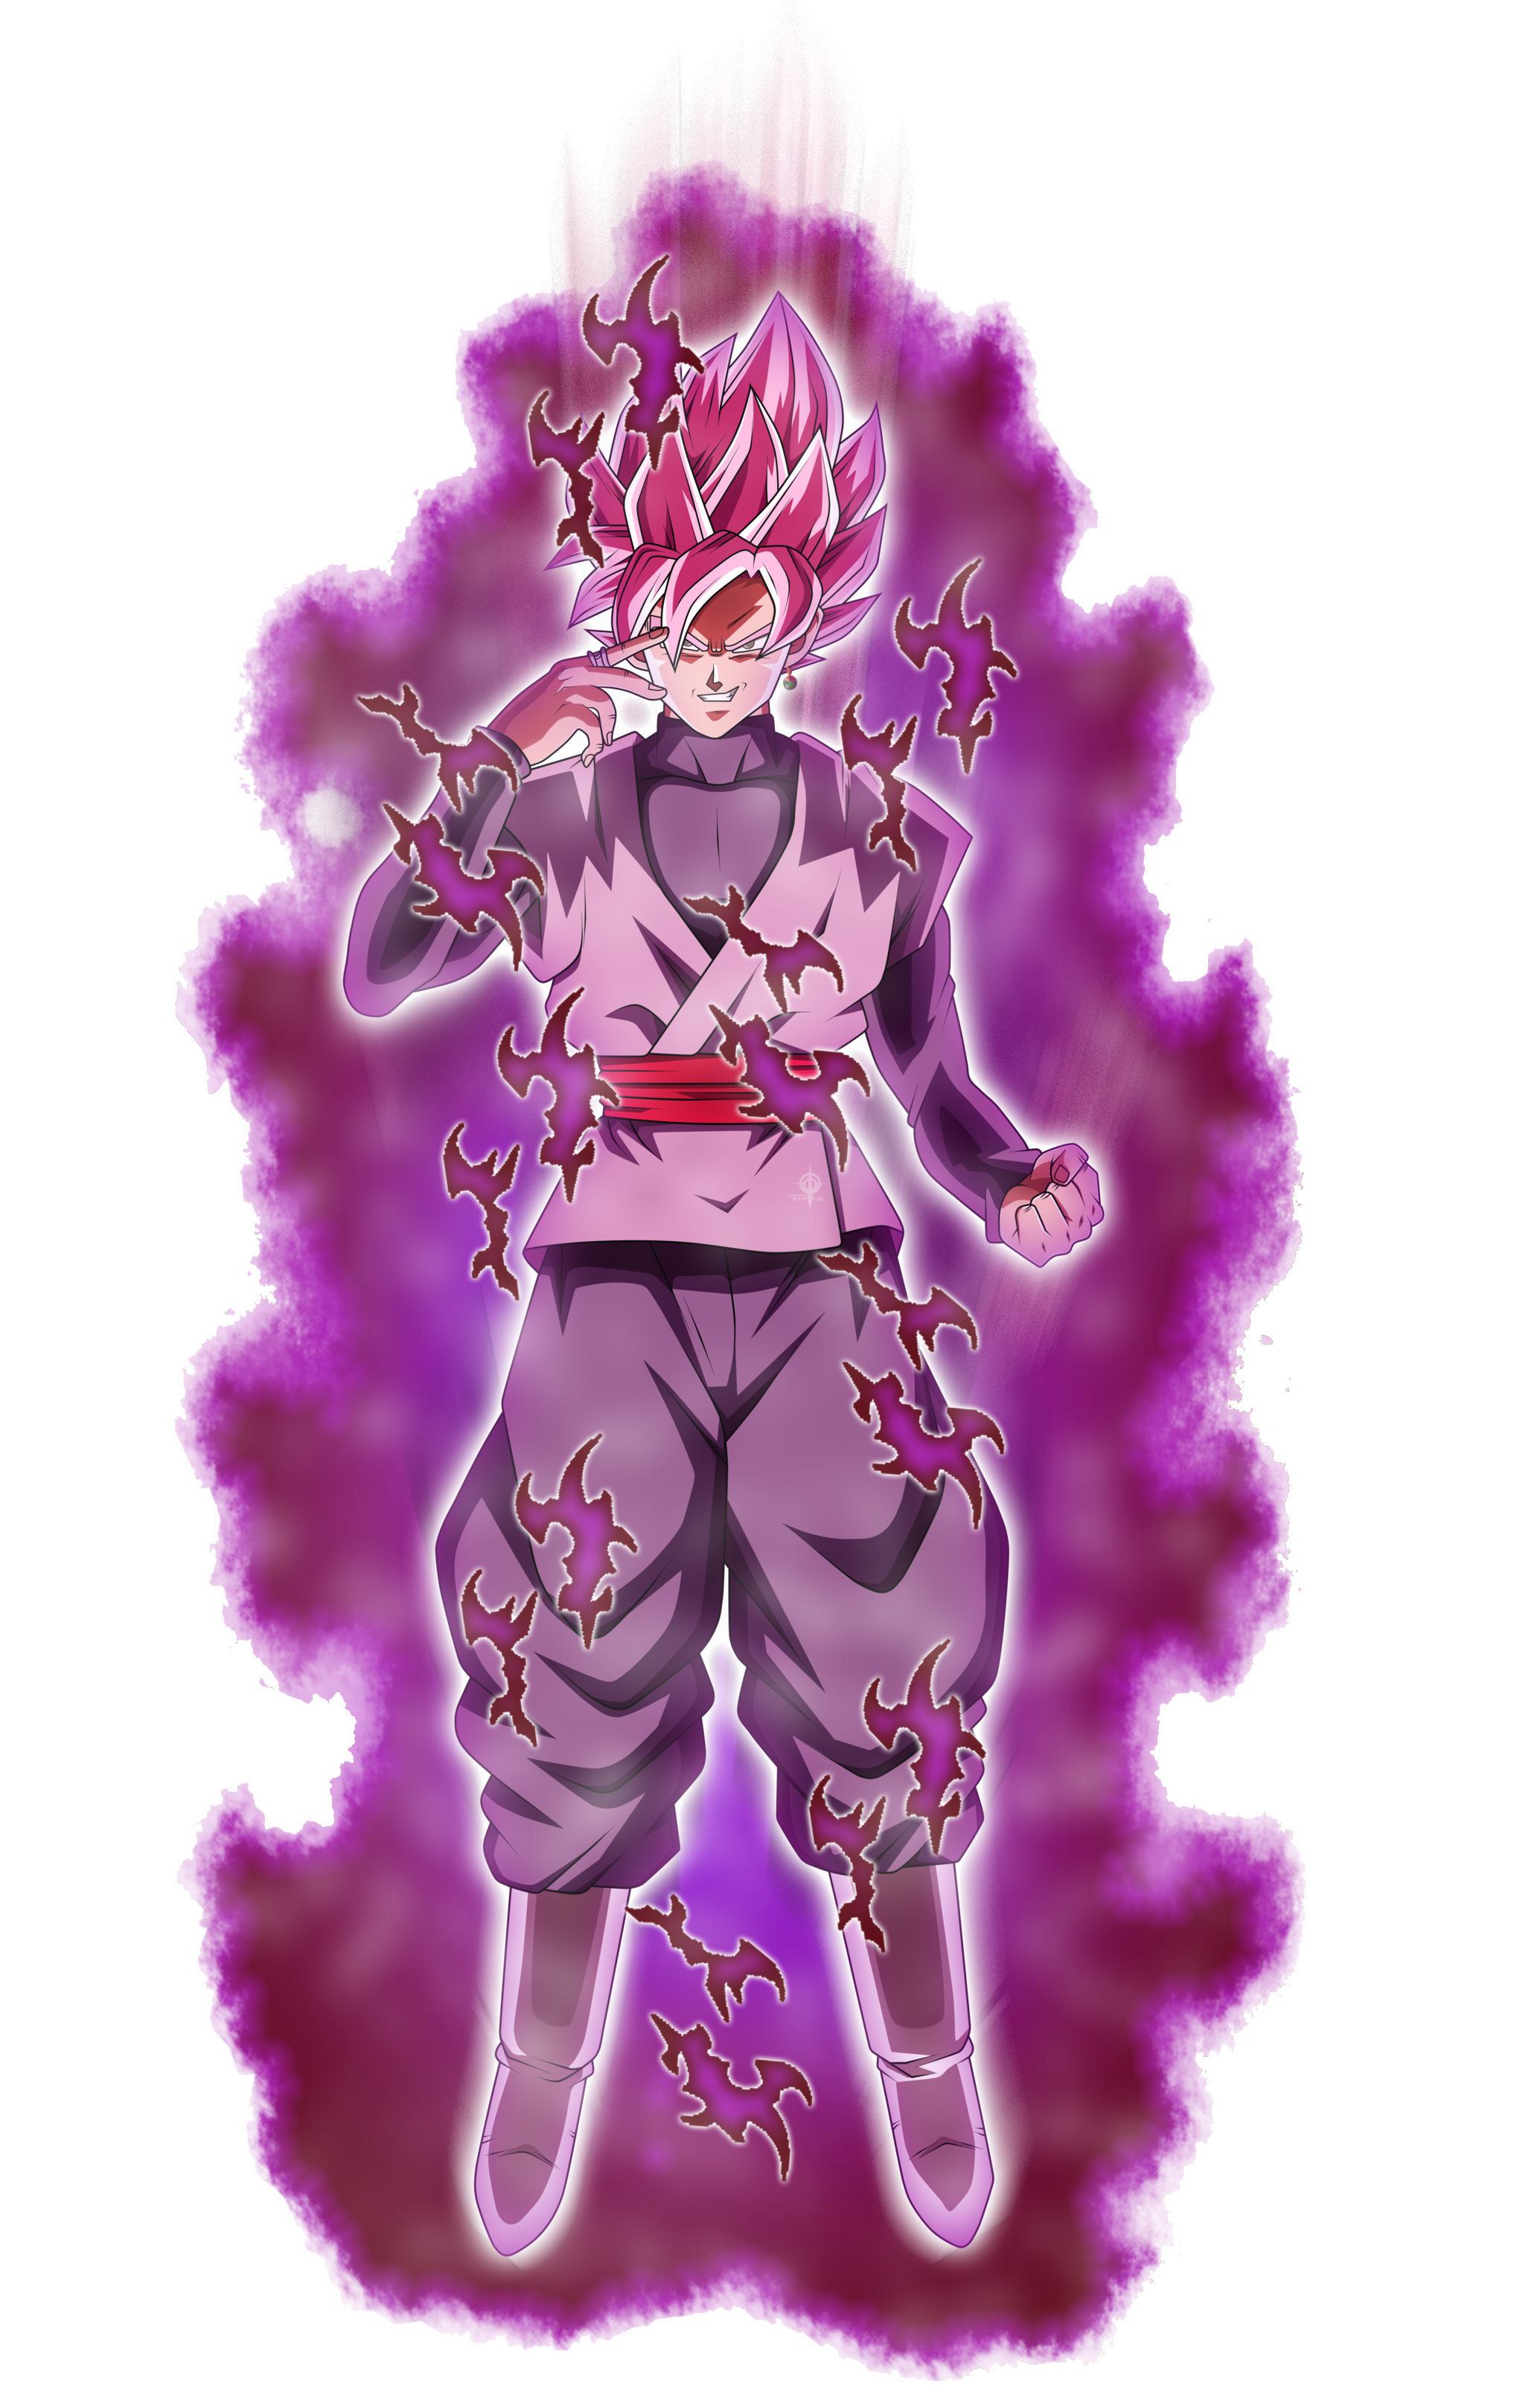 Black Goku Ssj God Rose Aura By Gokuxdxdxdz On Deviantart